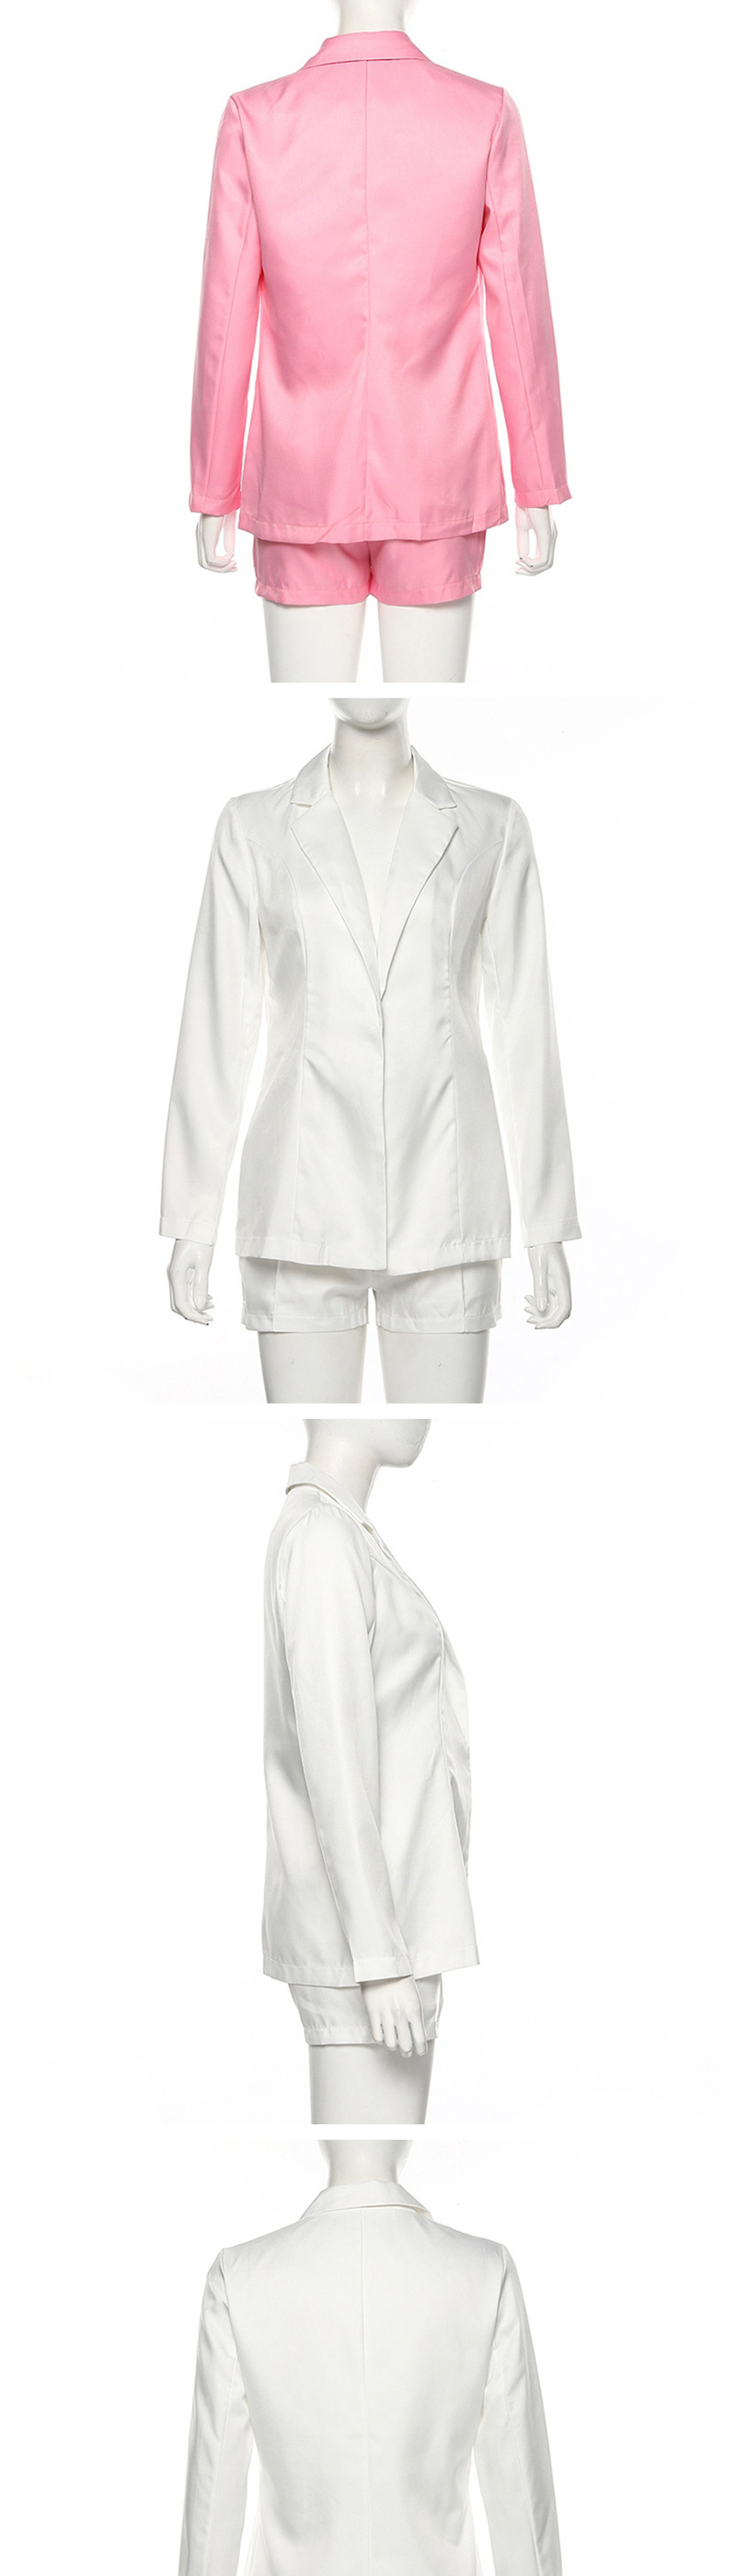 Fashion White Suit High Waist Shorts Suit,Coat-Jacket